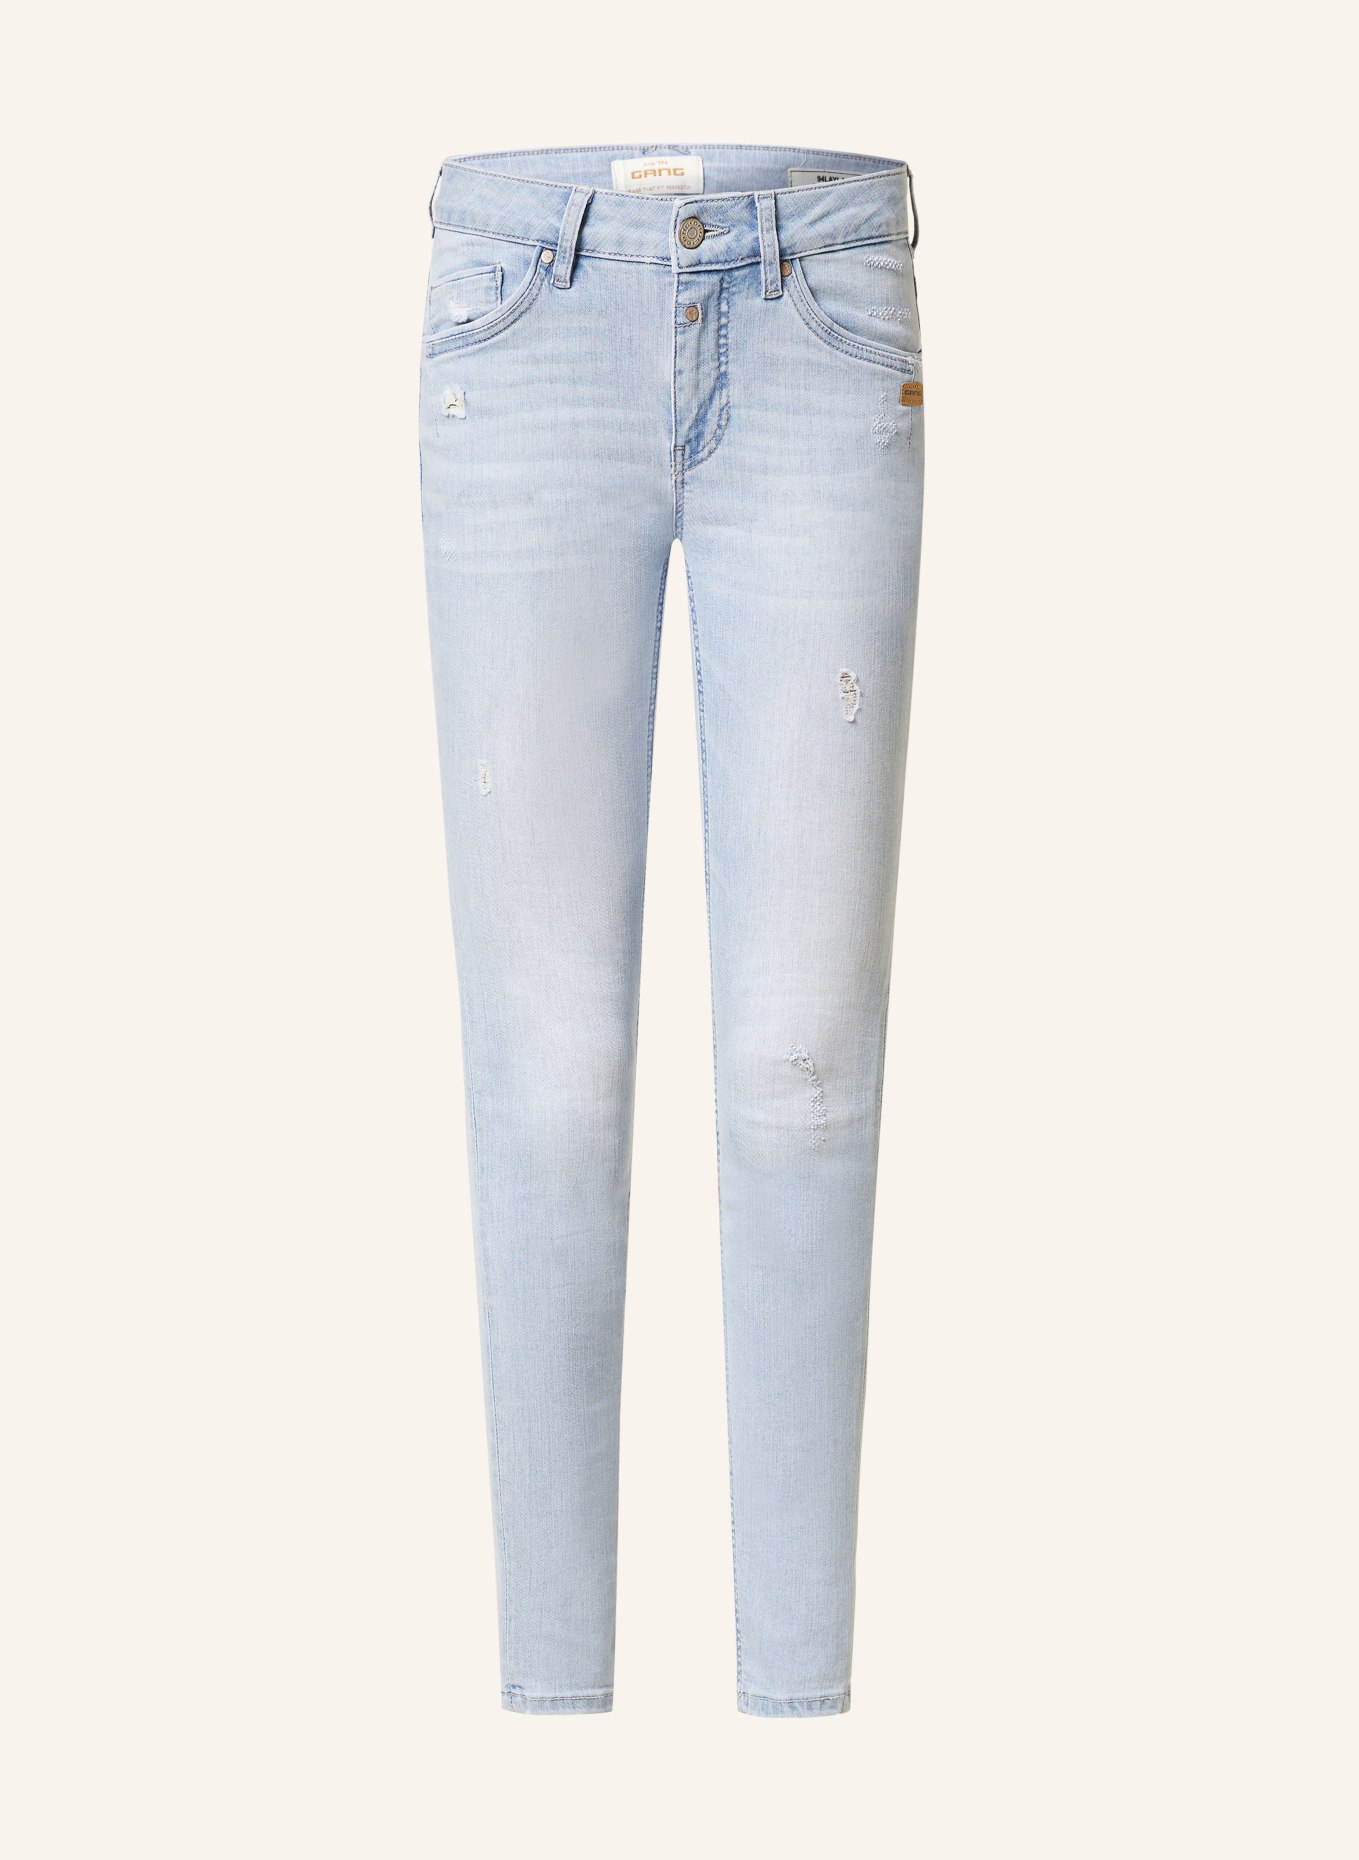 GANG Skinny Jeans LAYLA, Farbe: 7945 iced blue wash (Bild 1)